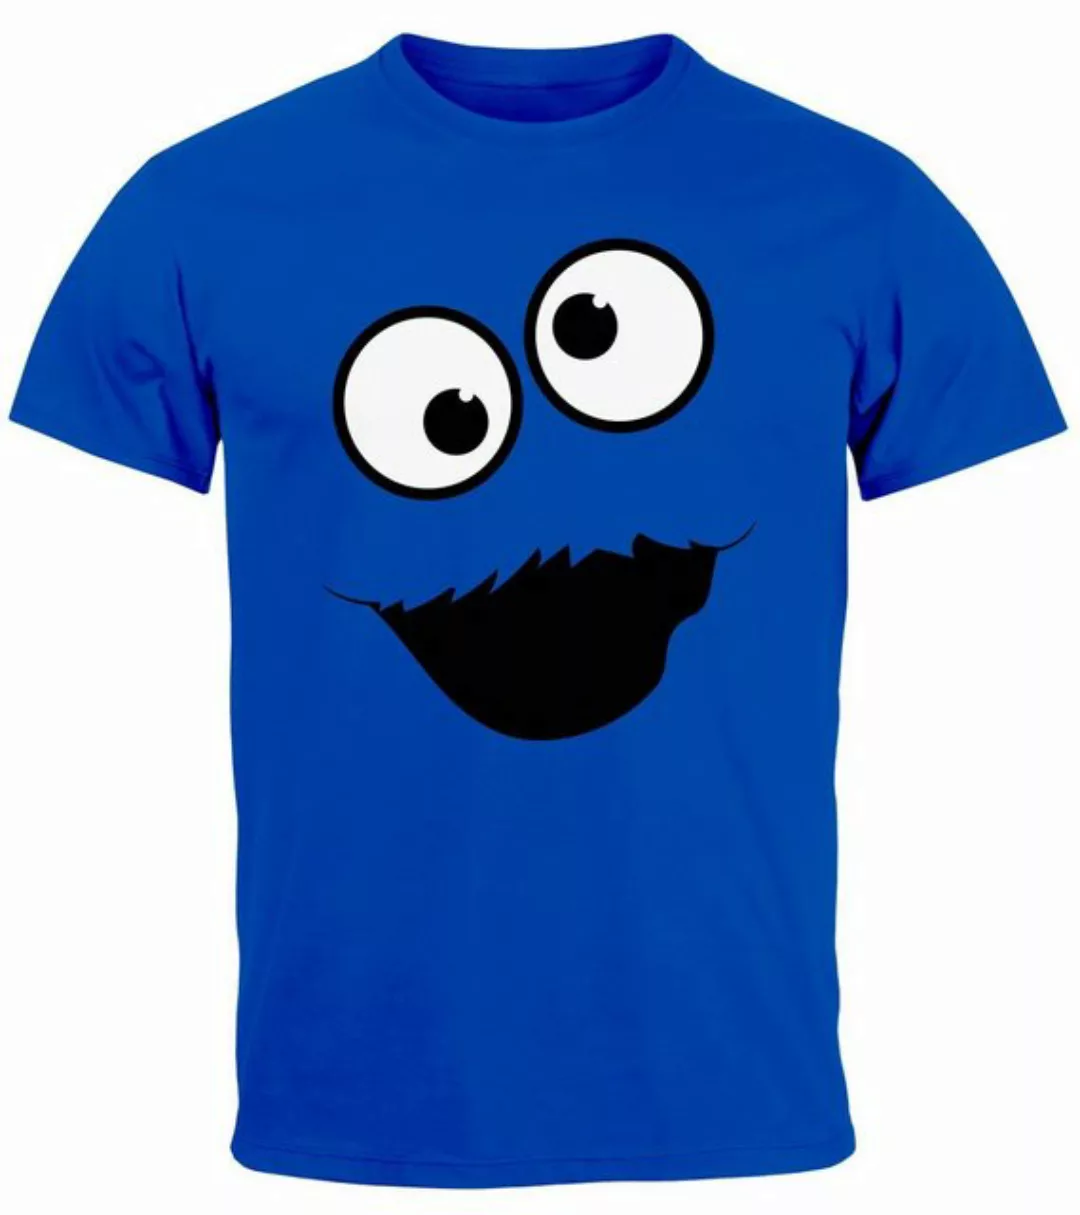 MoonWorks Print-Shirt Herren T-Shirt Fasching Karneval Keksmonster Krümel-U günstig online kaufen